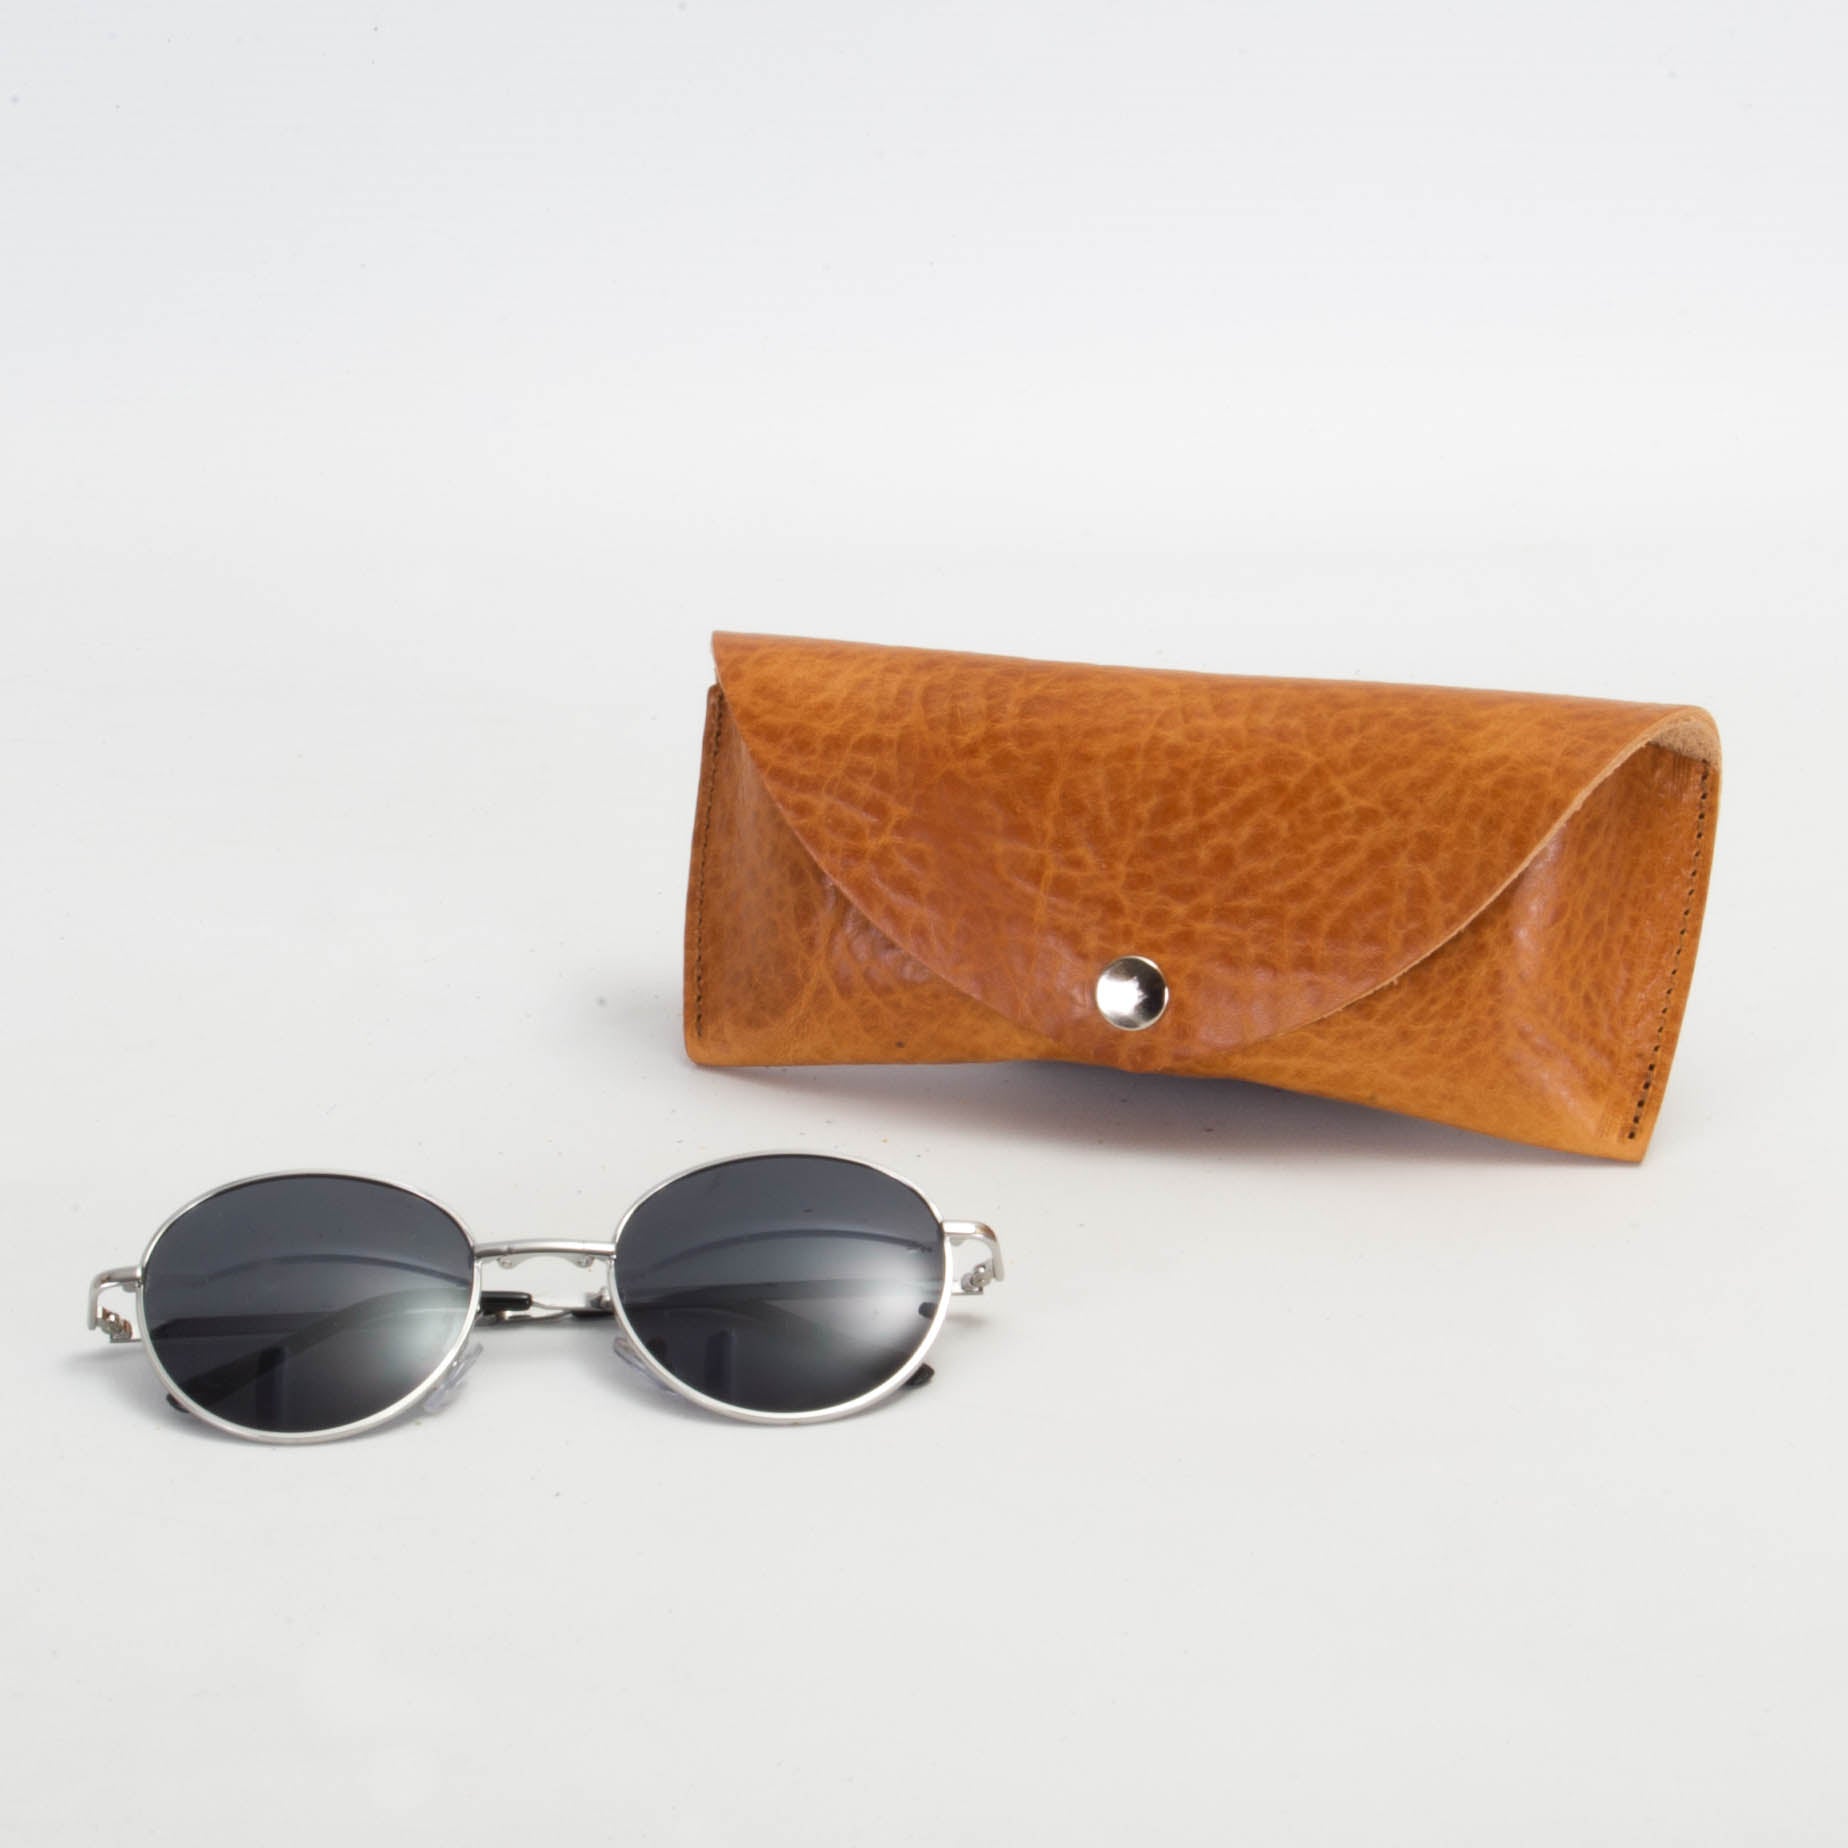 Leather Sunglasses Case - Antique Tan